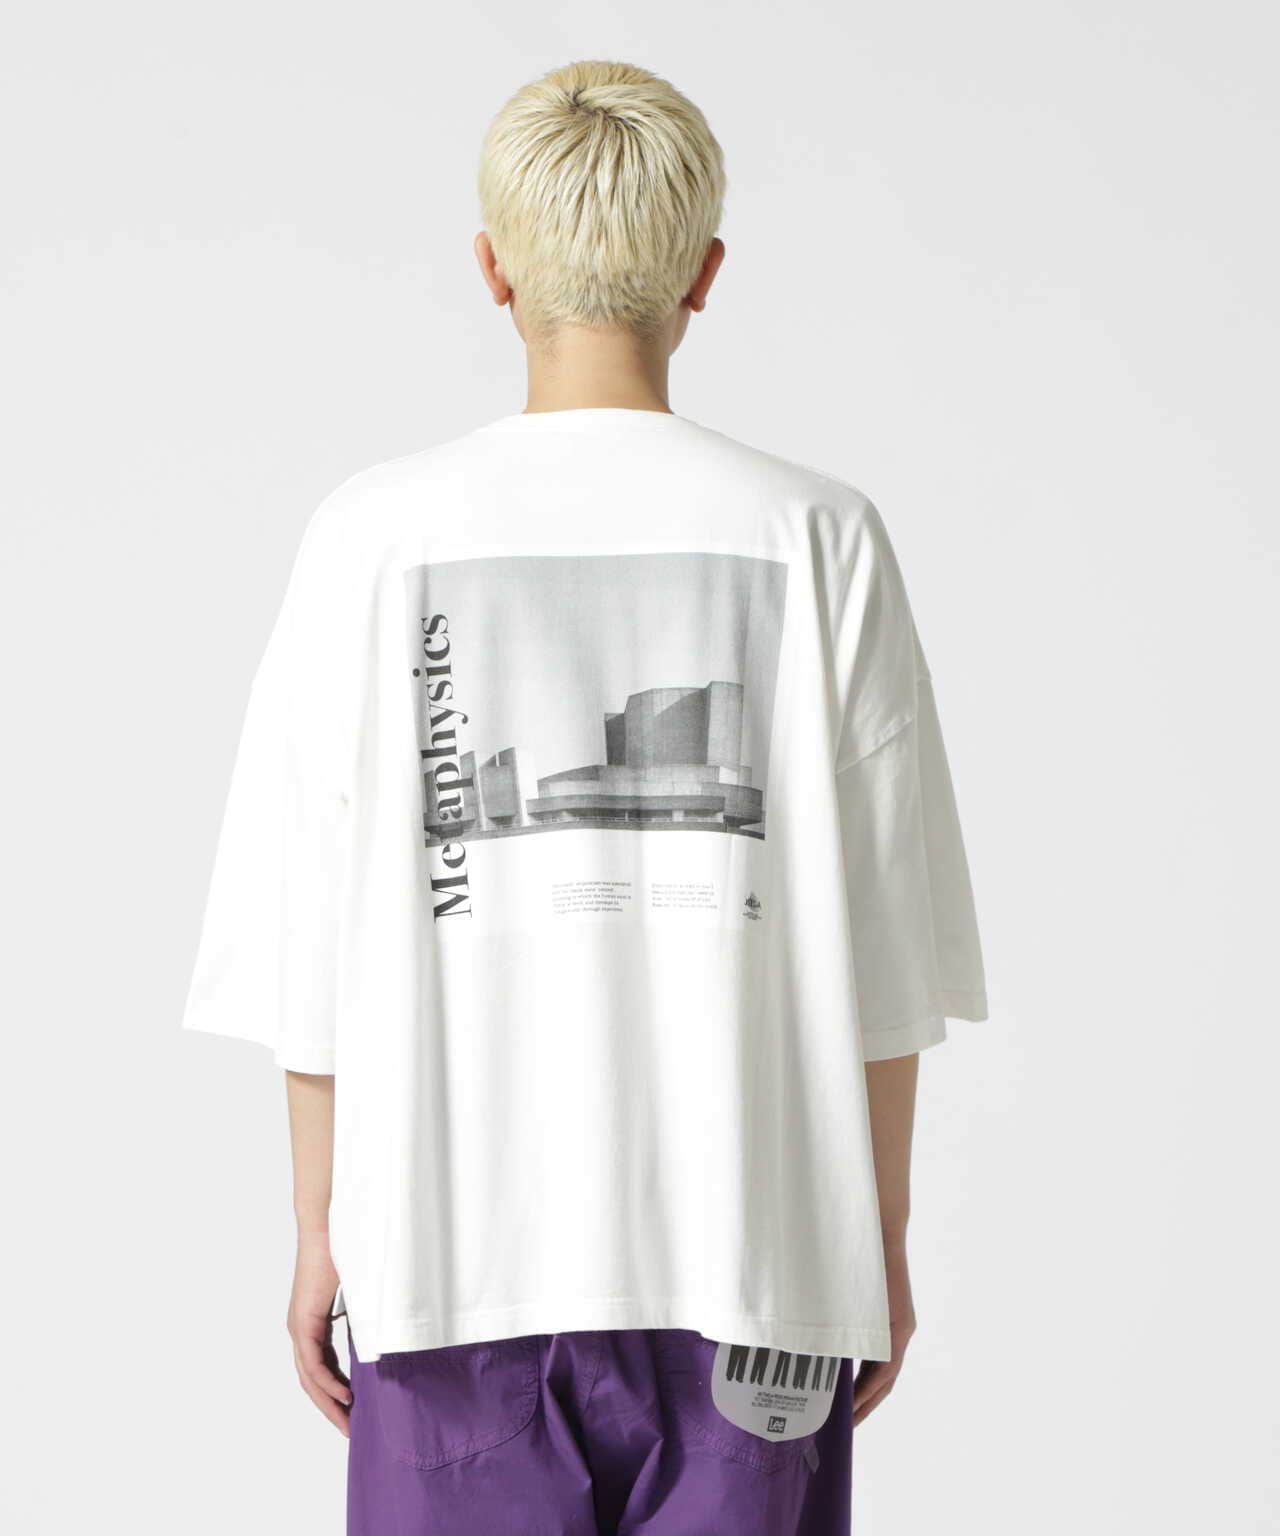 JieDa LOGO T-SHIRT WHITE - Tシャツ/カットソー(半袖/袖なし)